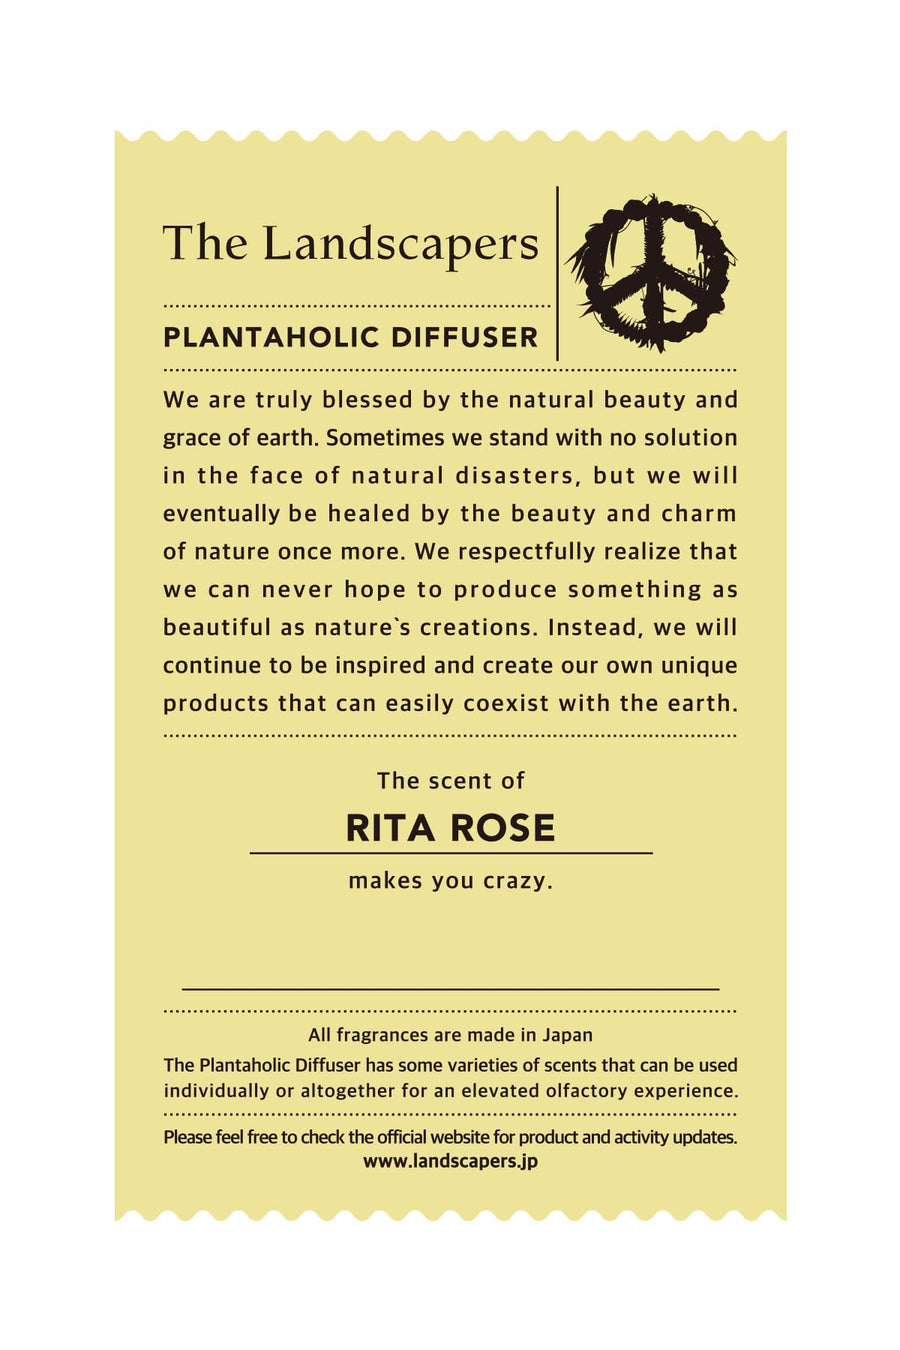 THE LANDSCAPERS -PLANTAHOLIC DIFFUSER TYPE D 04b- Rita Rose